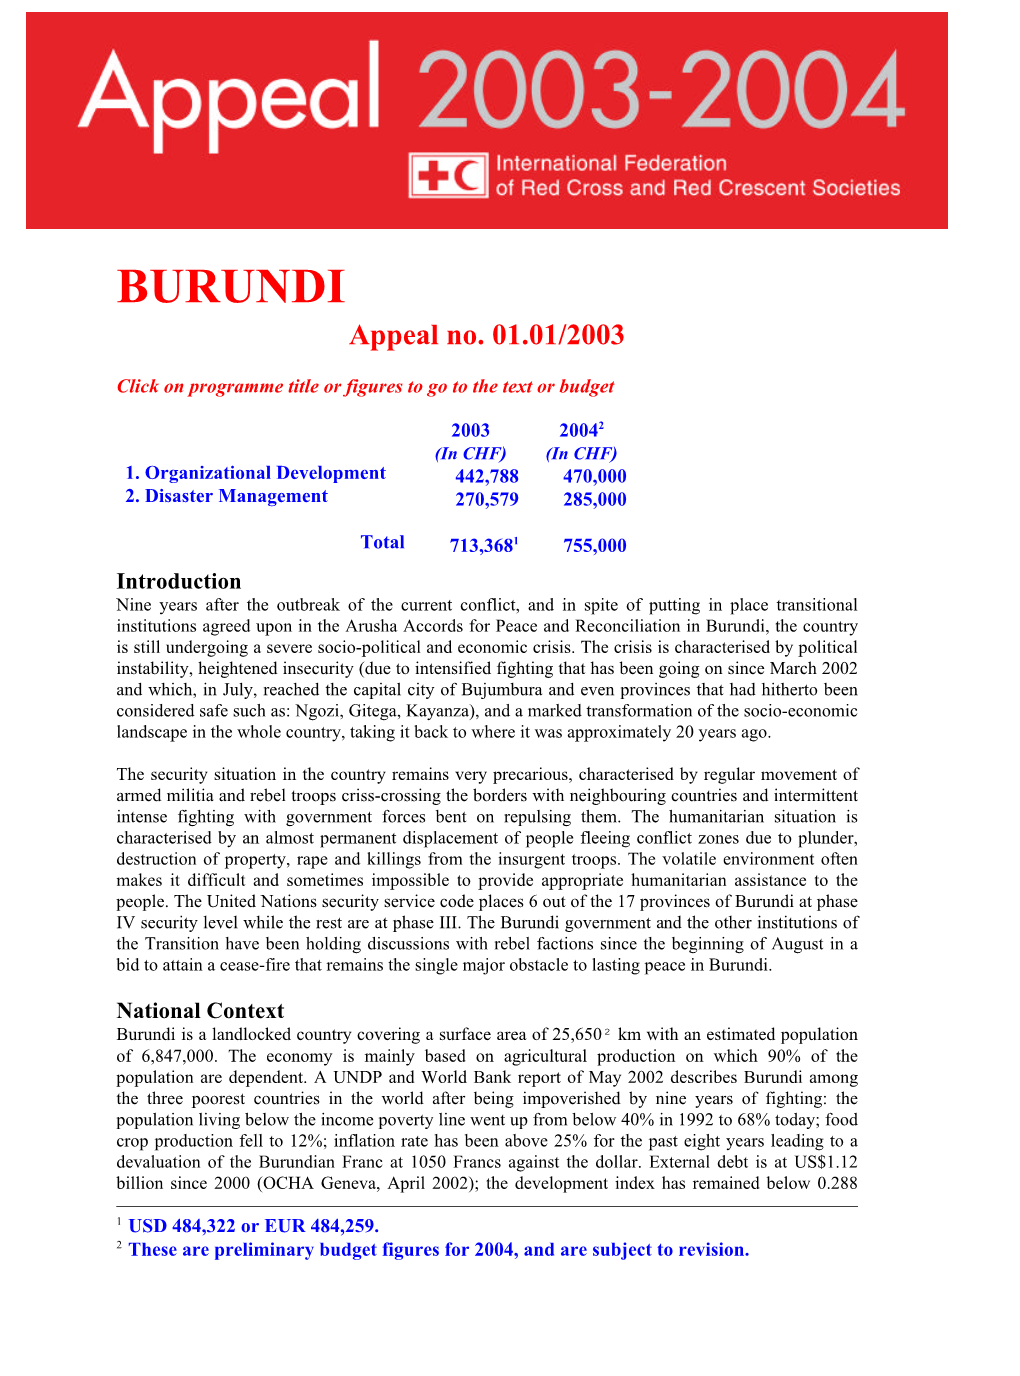 BURUNDI Appeal No